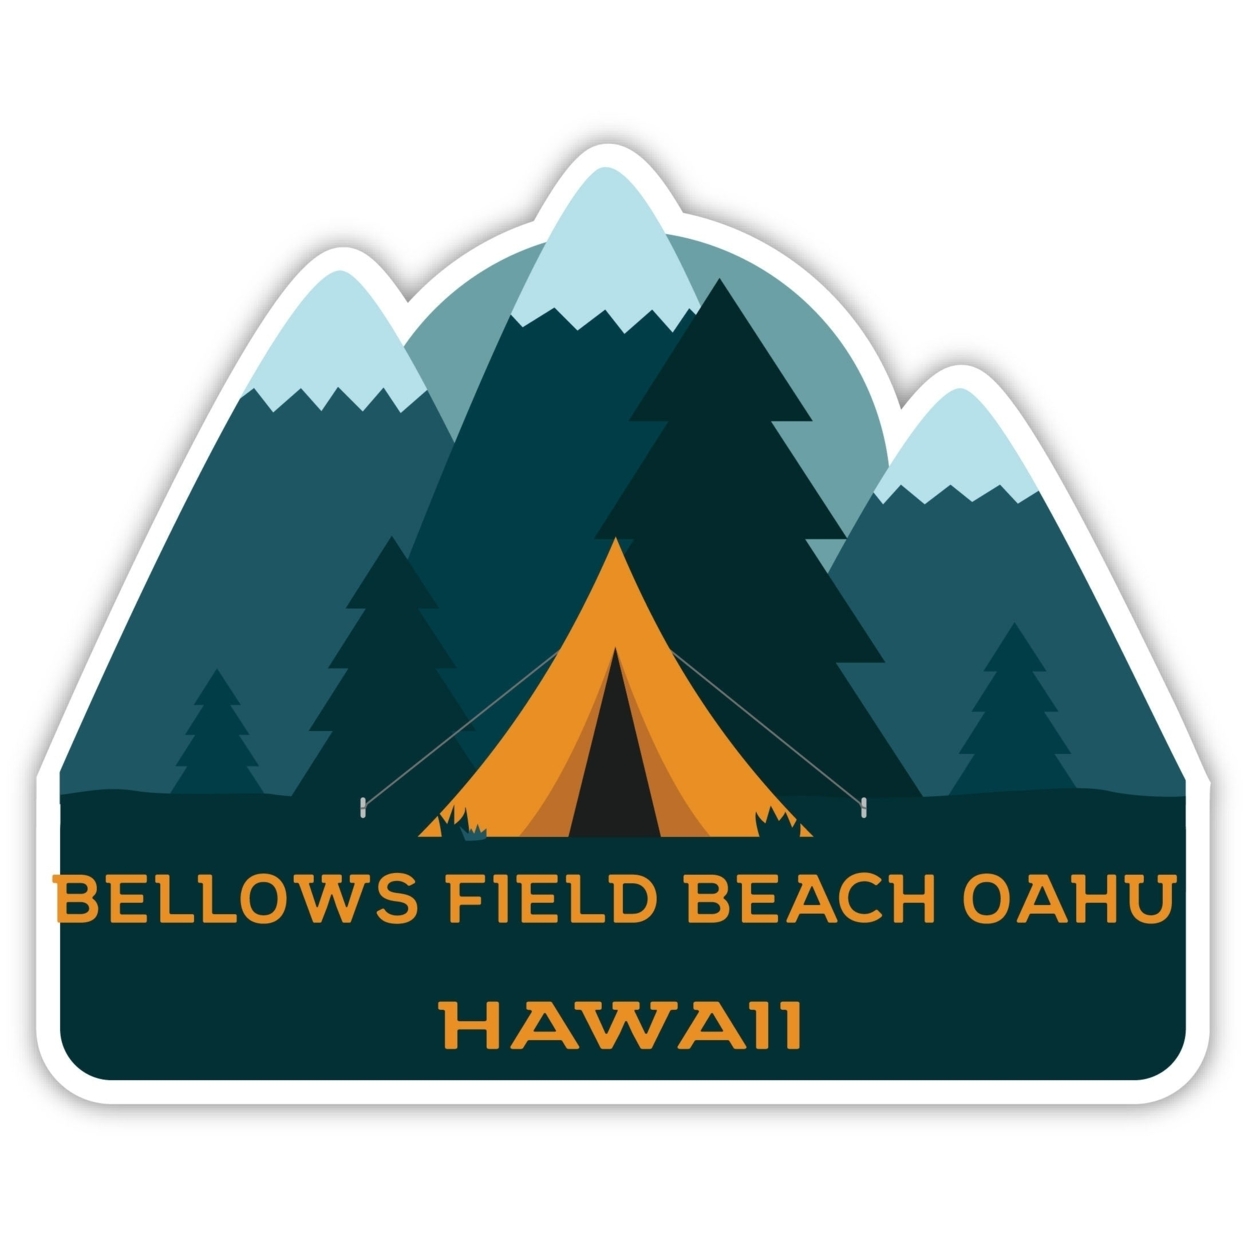 Bellows Field Beach Oahu Hawaii Souvenir Decorative Stickers (Choose Theme And Size) - Single Unit, 12-Inch, Tent